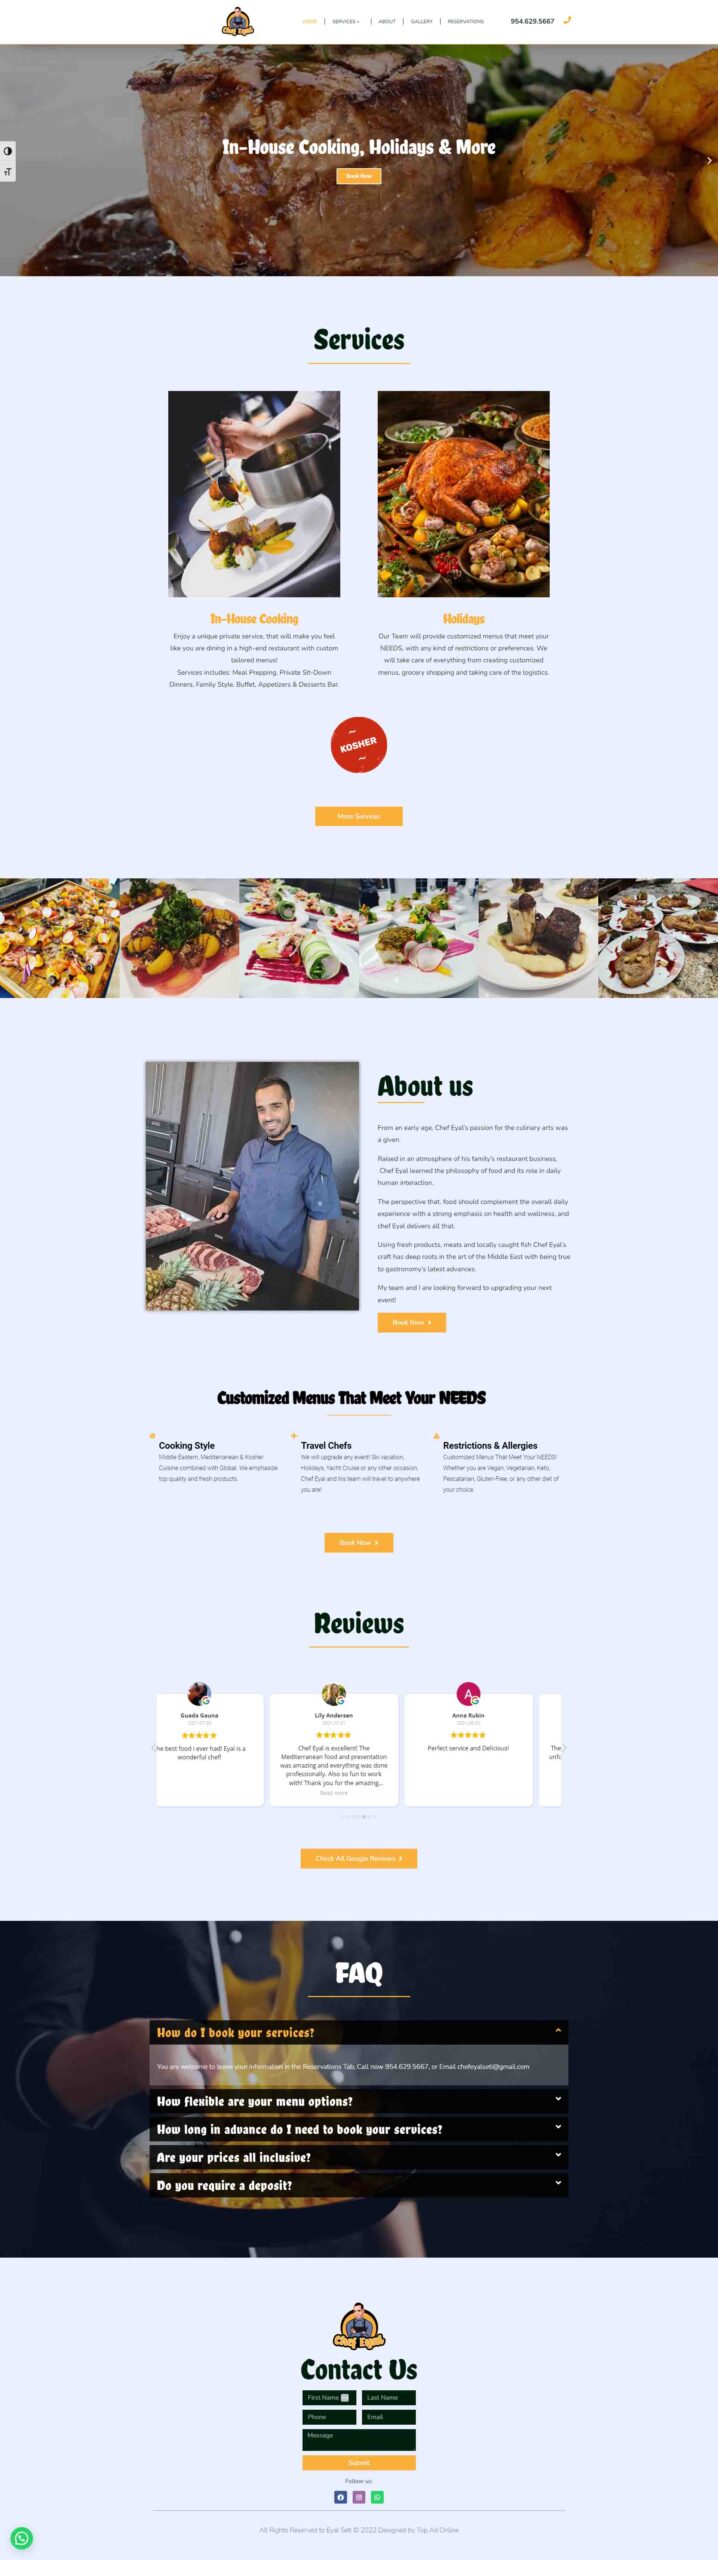 restaurant-chef-website design-904-572-2959-San Francisco, California- Oakland, Emeryville, Berkeley